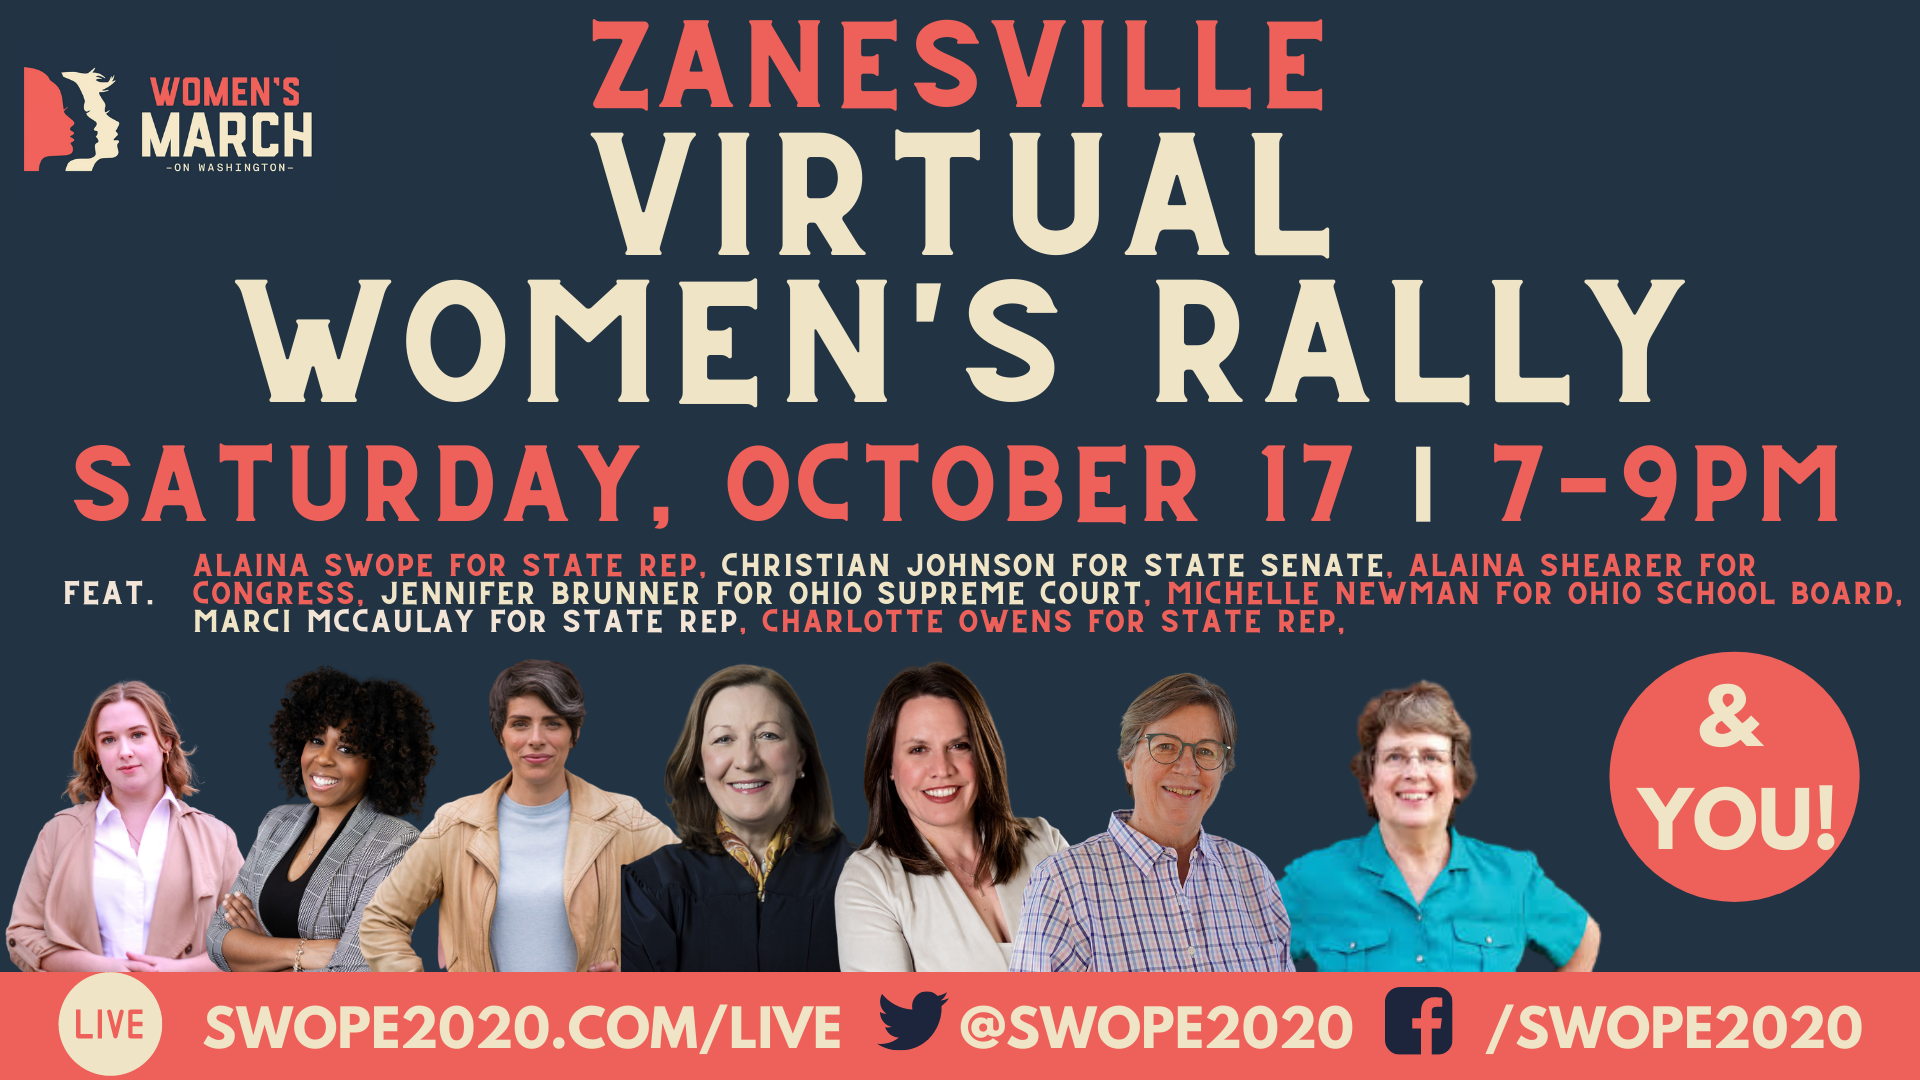 Zanesville Women's Rally